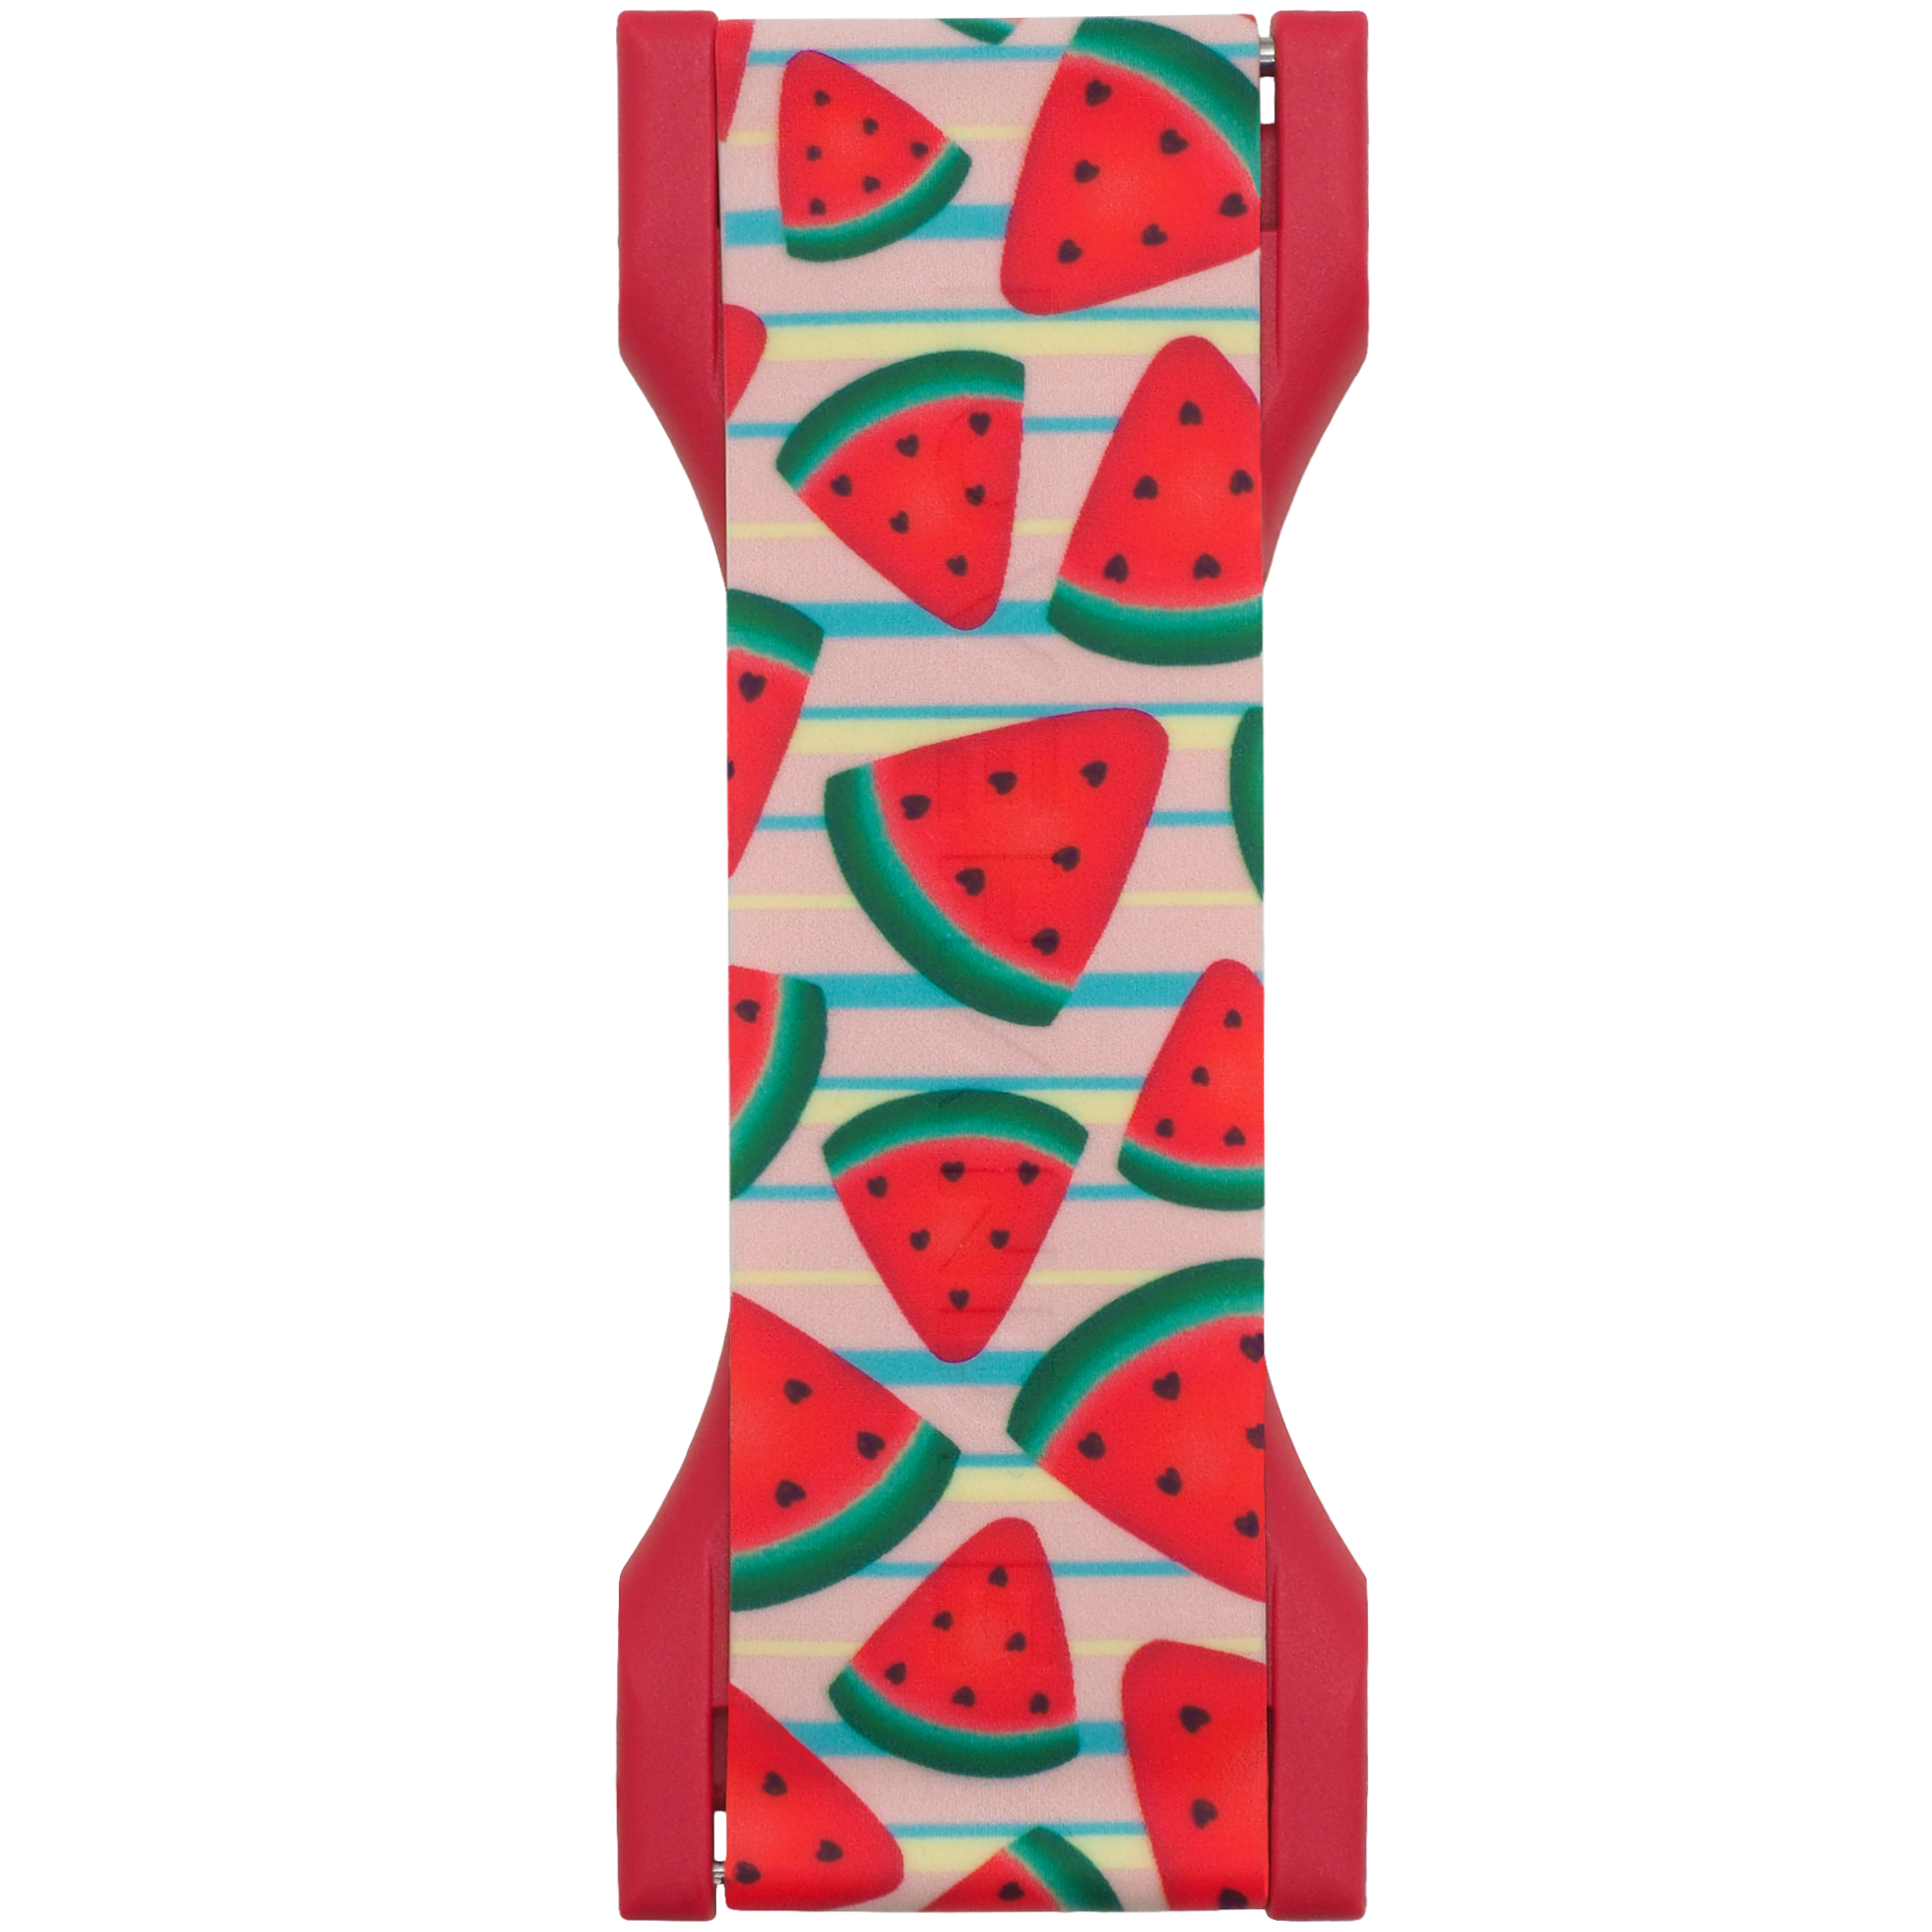 LoveHandle PRO- Watermelon Slice